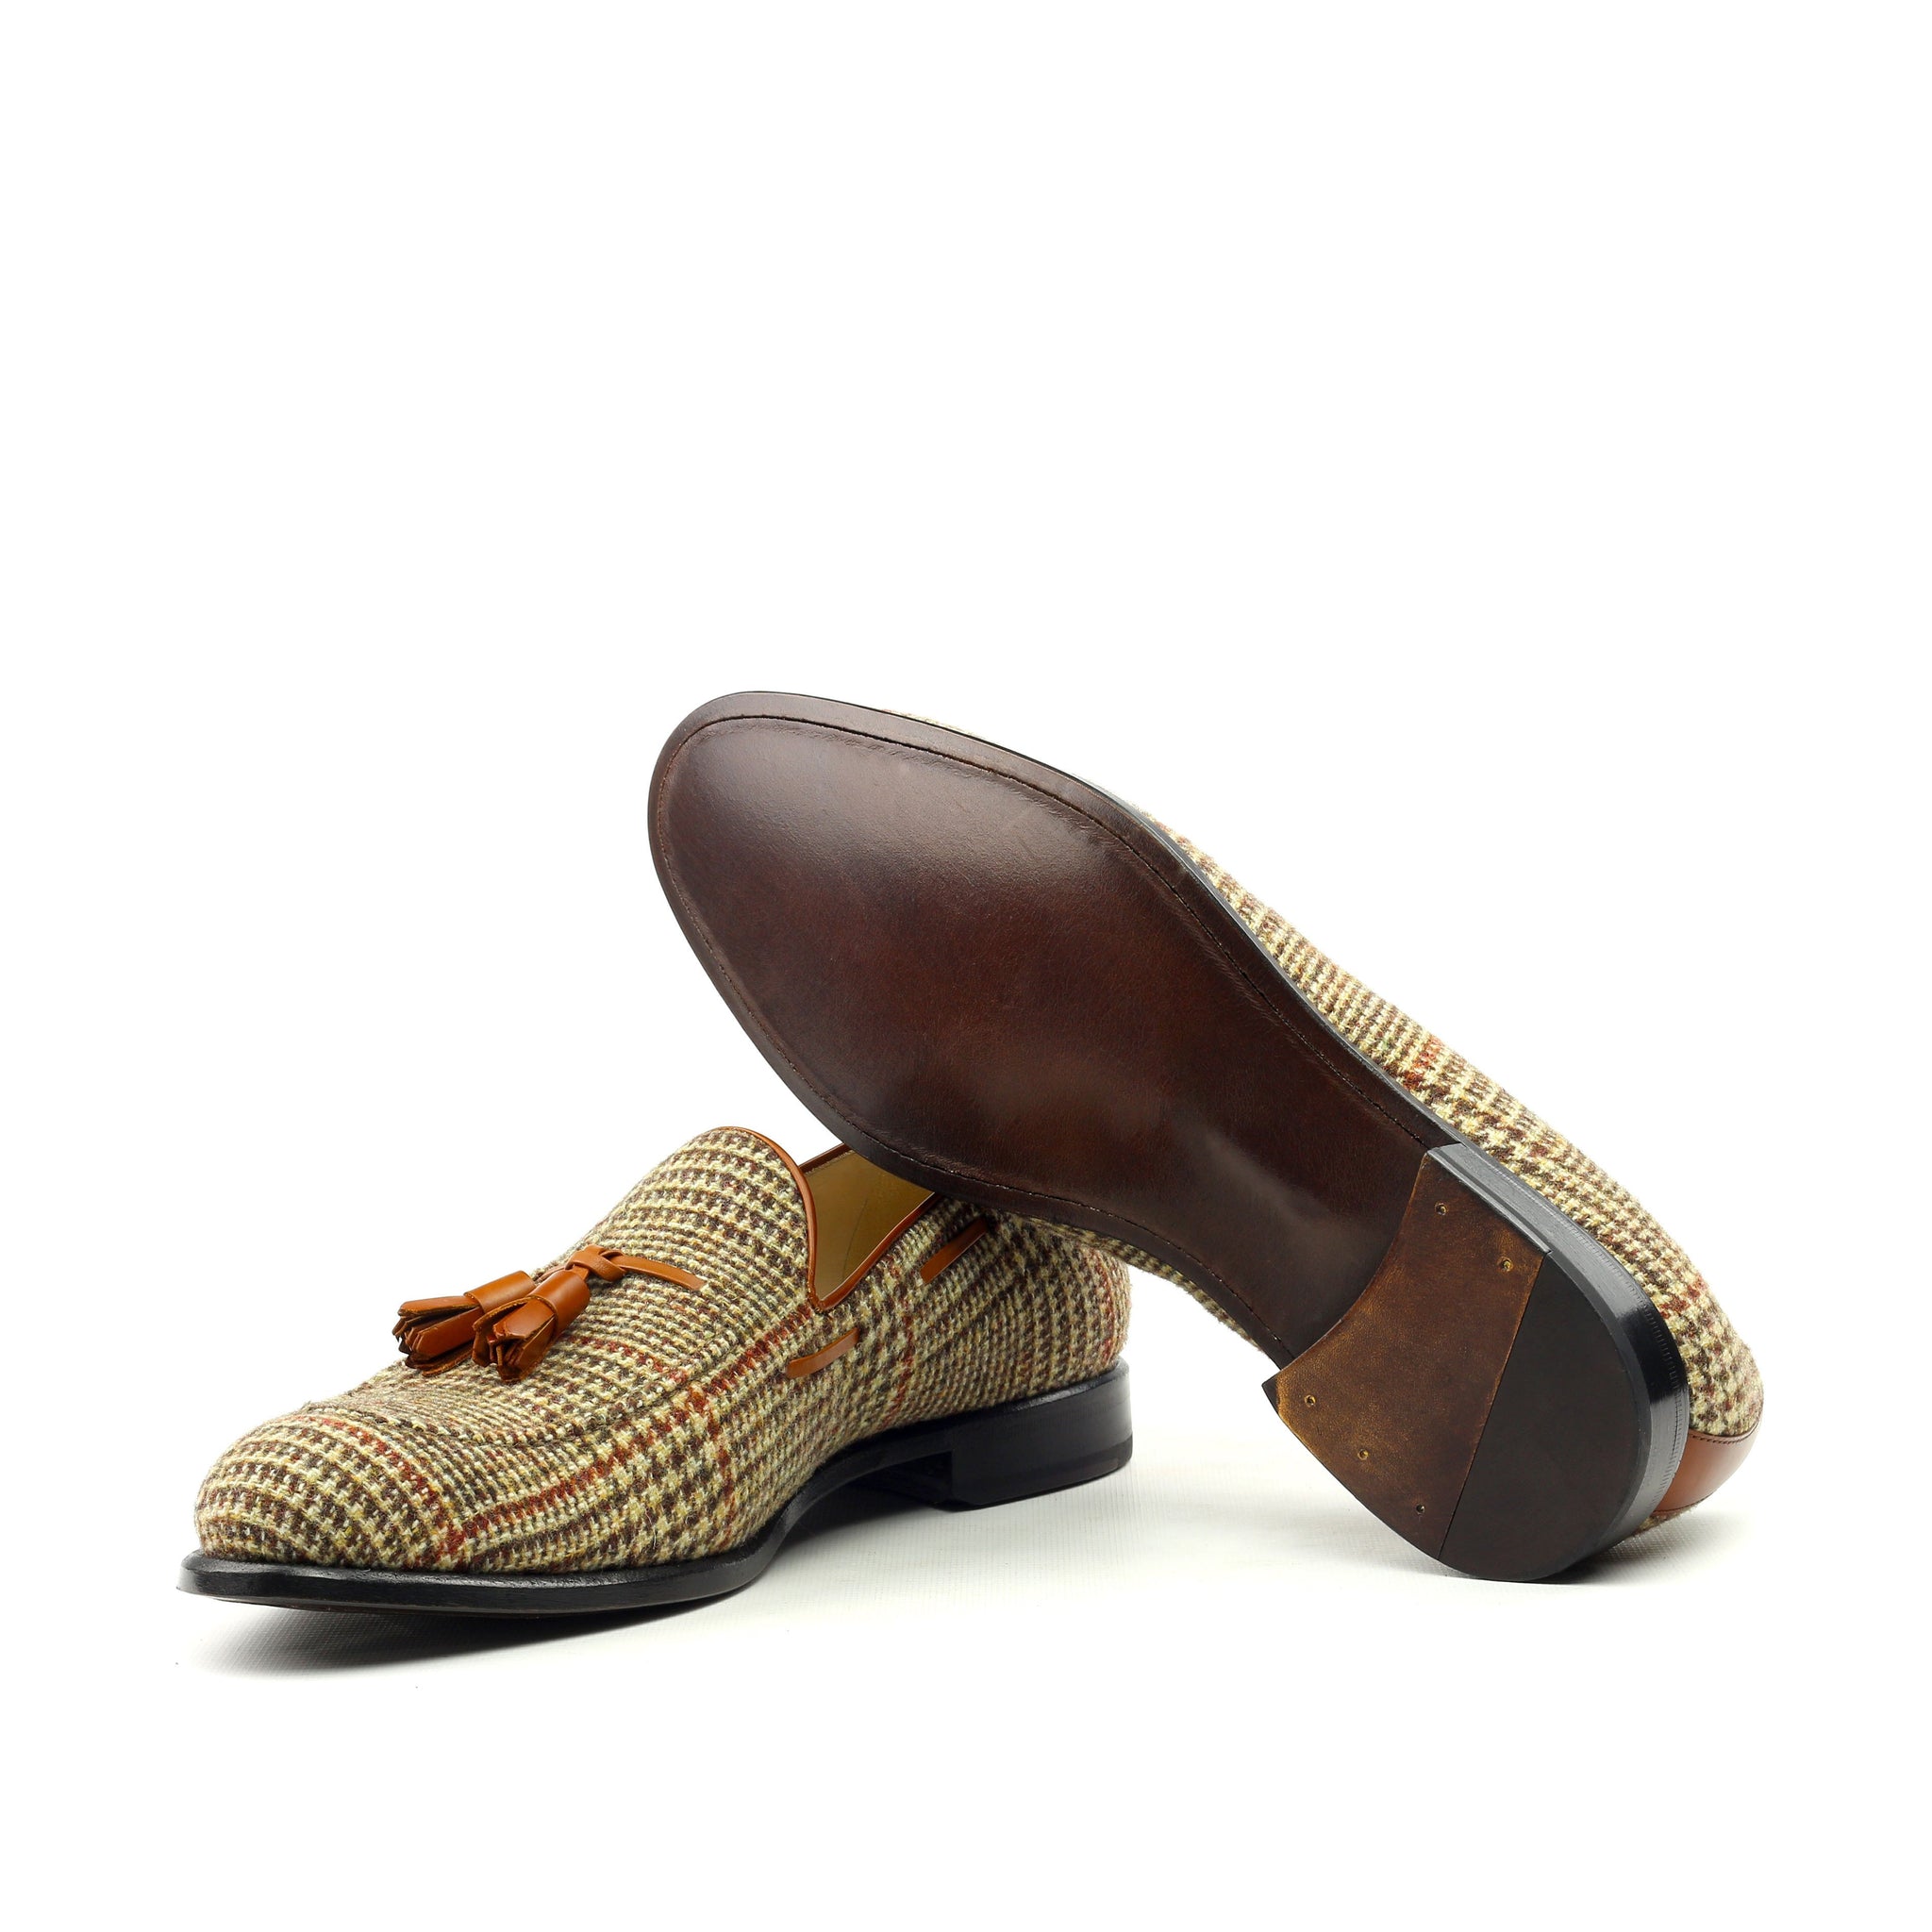 Unique Handcrafted Tweed Sartorial Slip on Loafer w/ Tassles